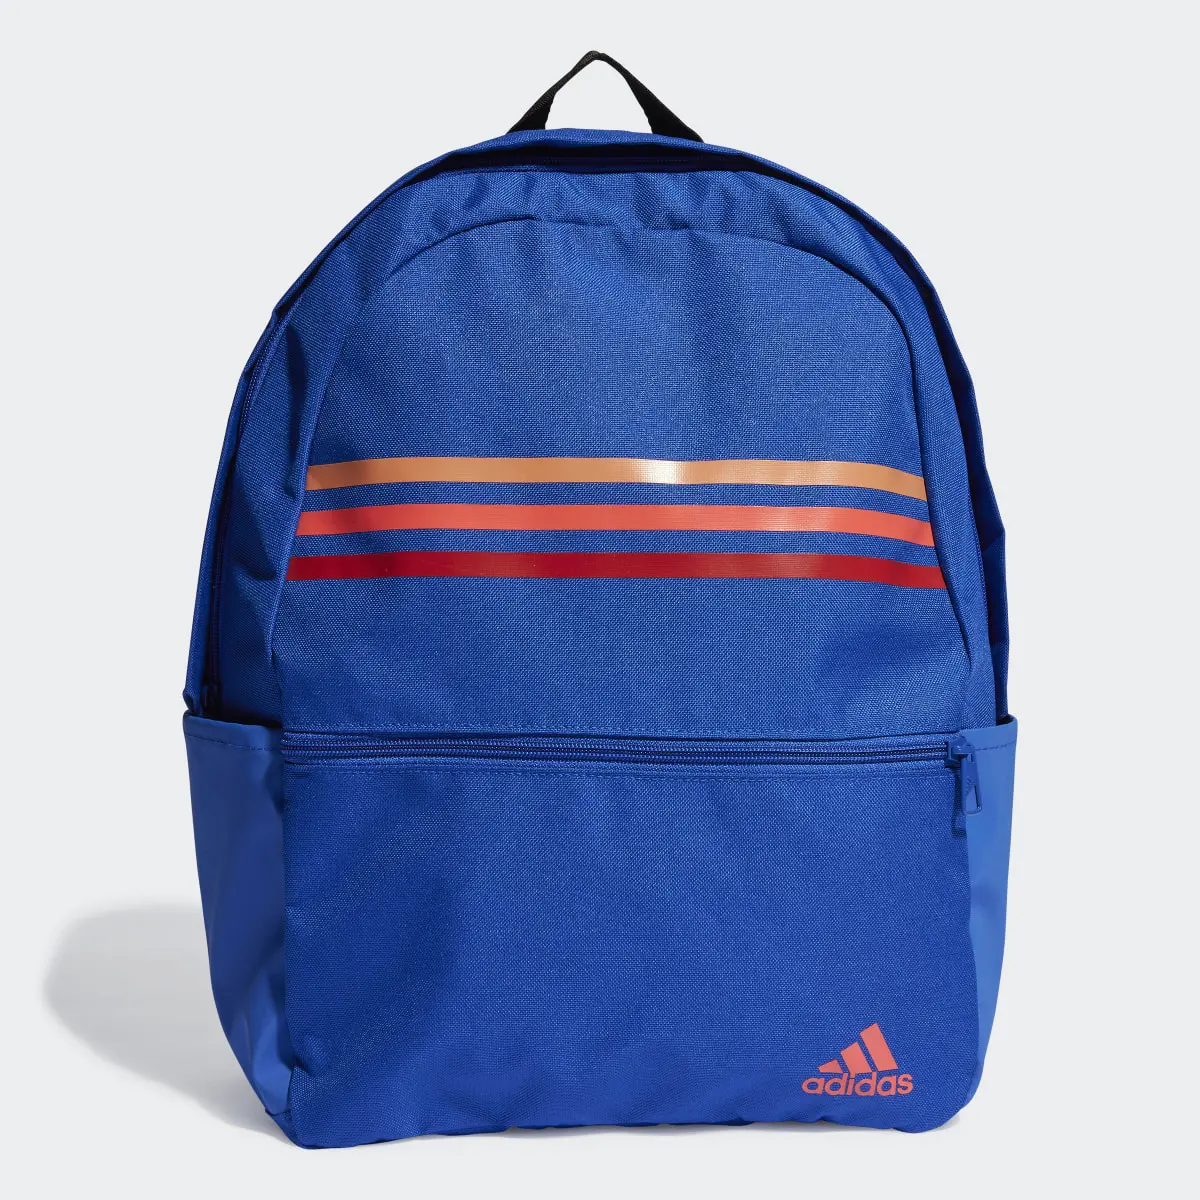 Adidas Classic Horizontal 3-Stripes Backpack. 2